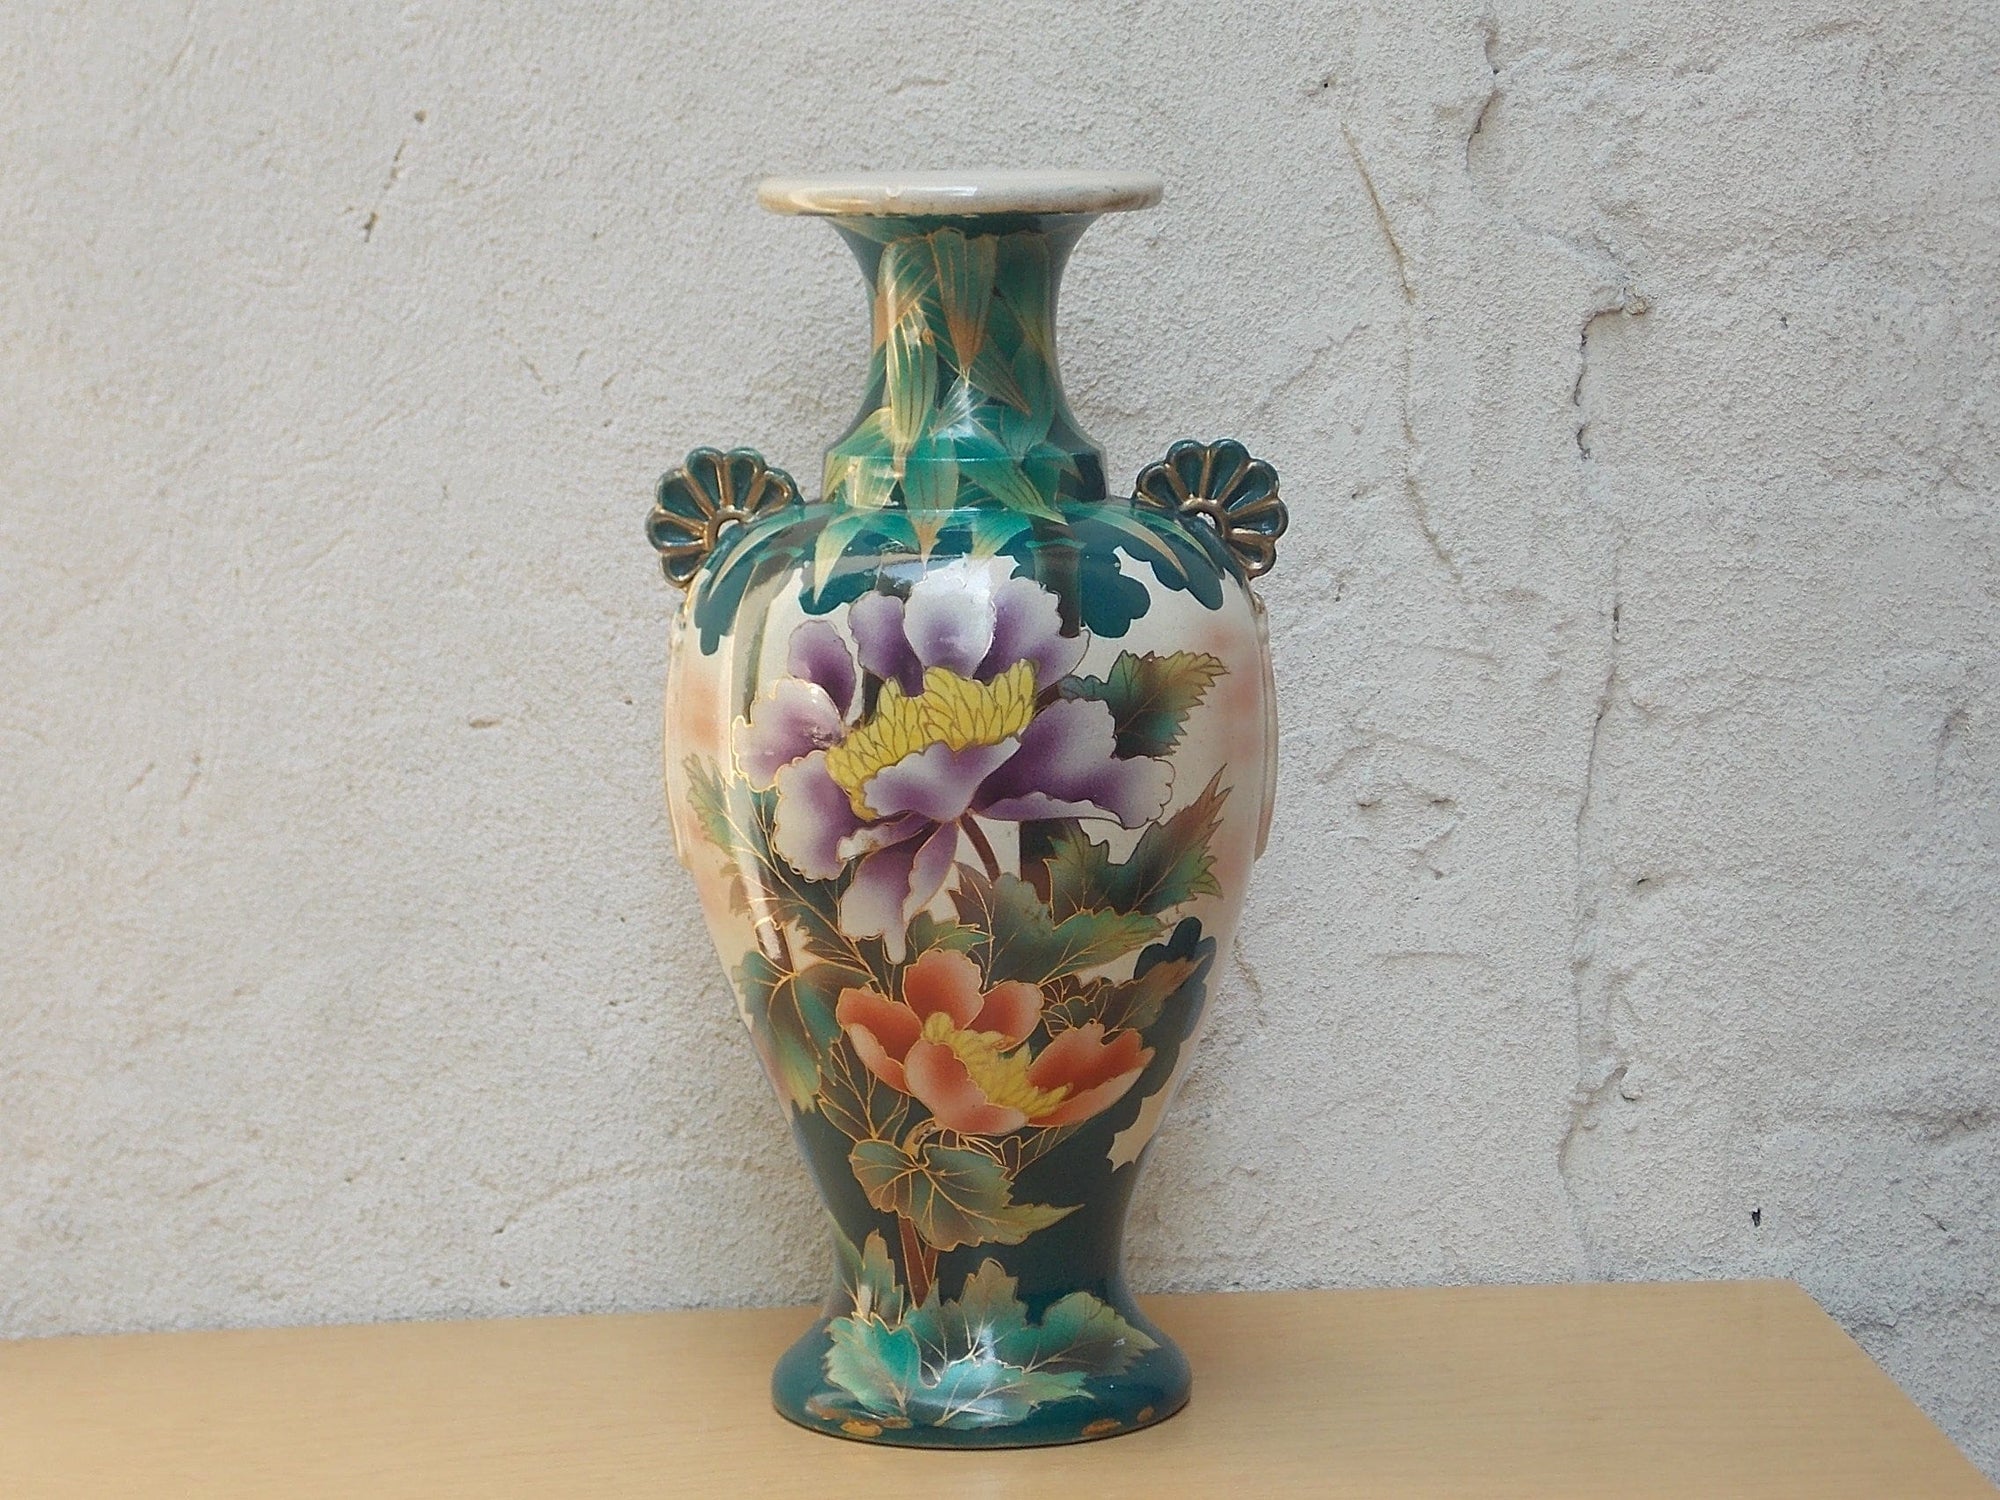 https://cdn.shopify.com/s/files/1/0268/0005/files/i-like-mike-s-mid-century-modern-wall-decor-art-large-green-white-floral-gilded-urn-vase-with-pink-purple-orange-11840338362456_2000x.JPG?v=1690461182